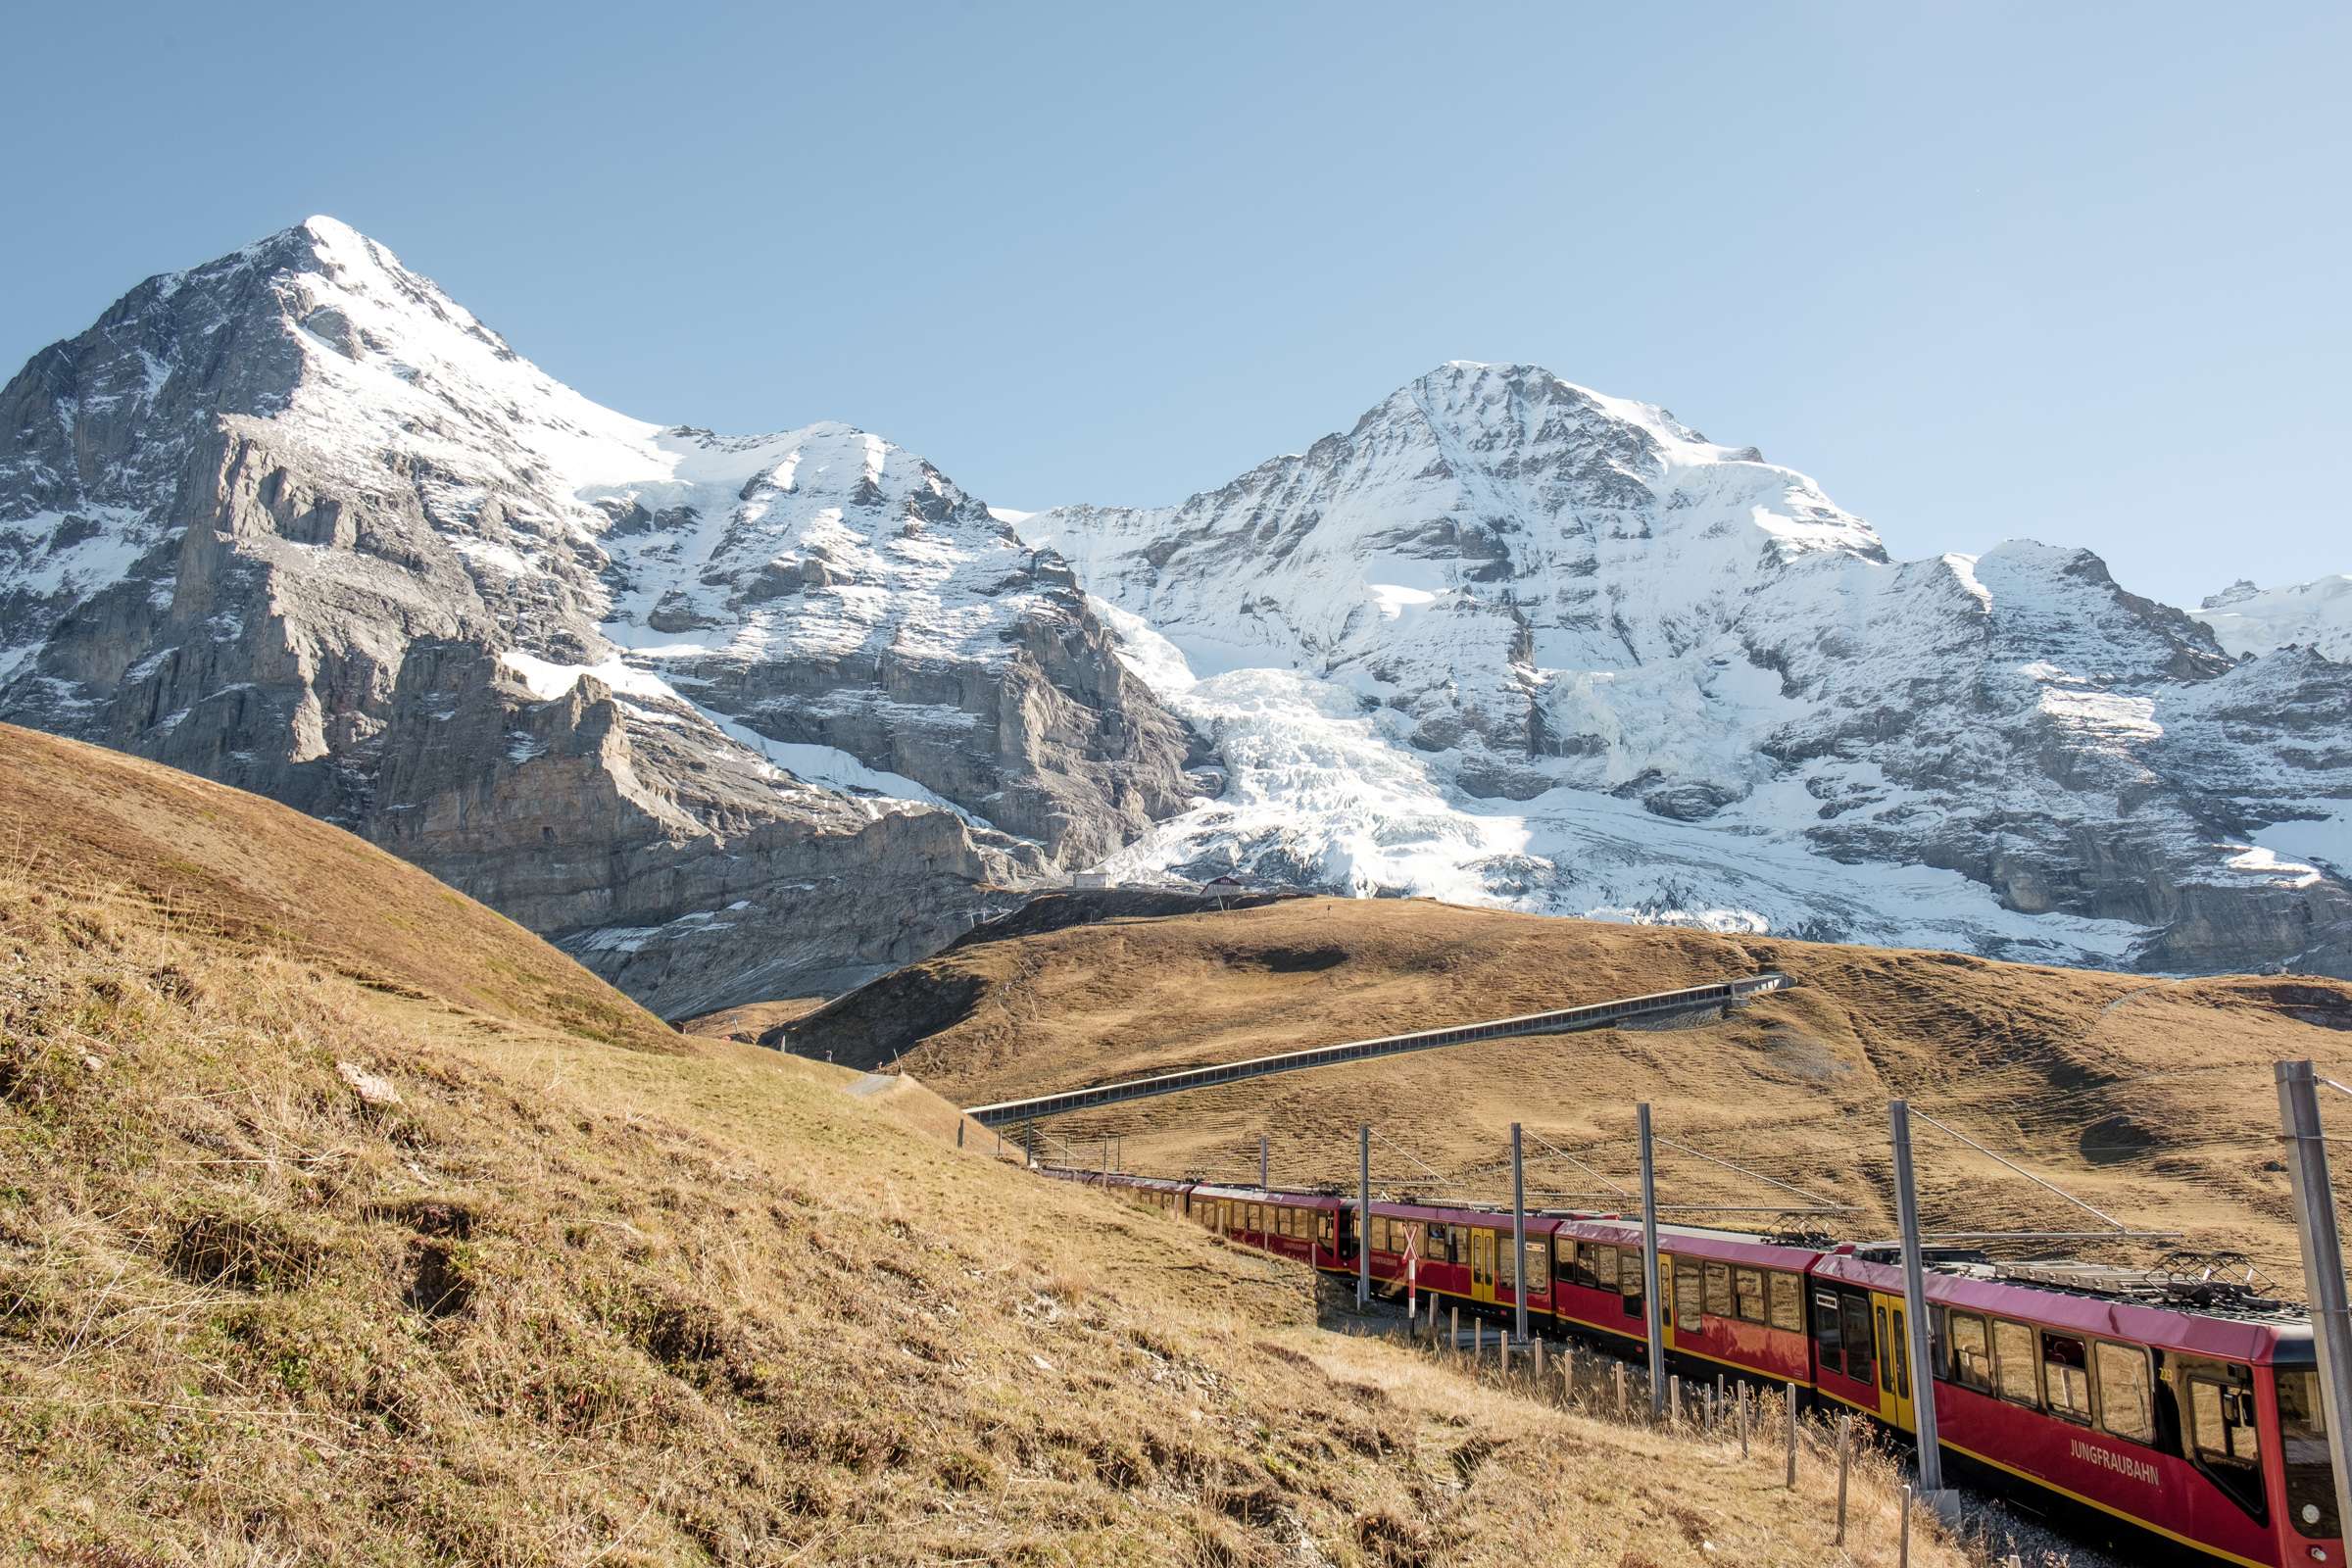 The Jungfrau train twisting through the mountains